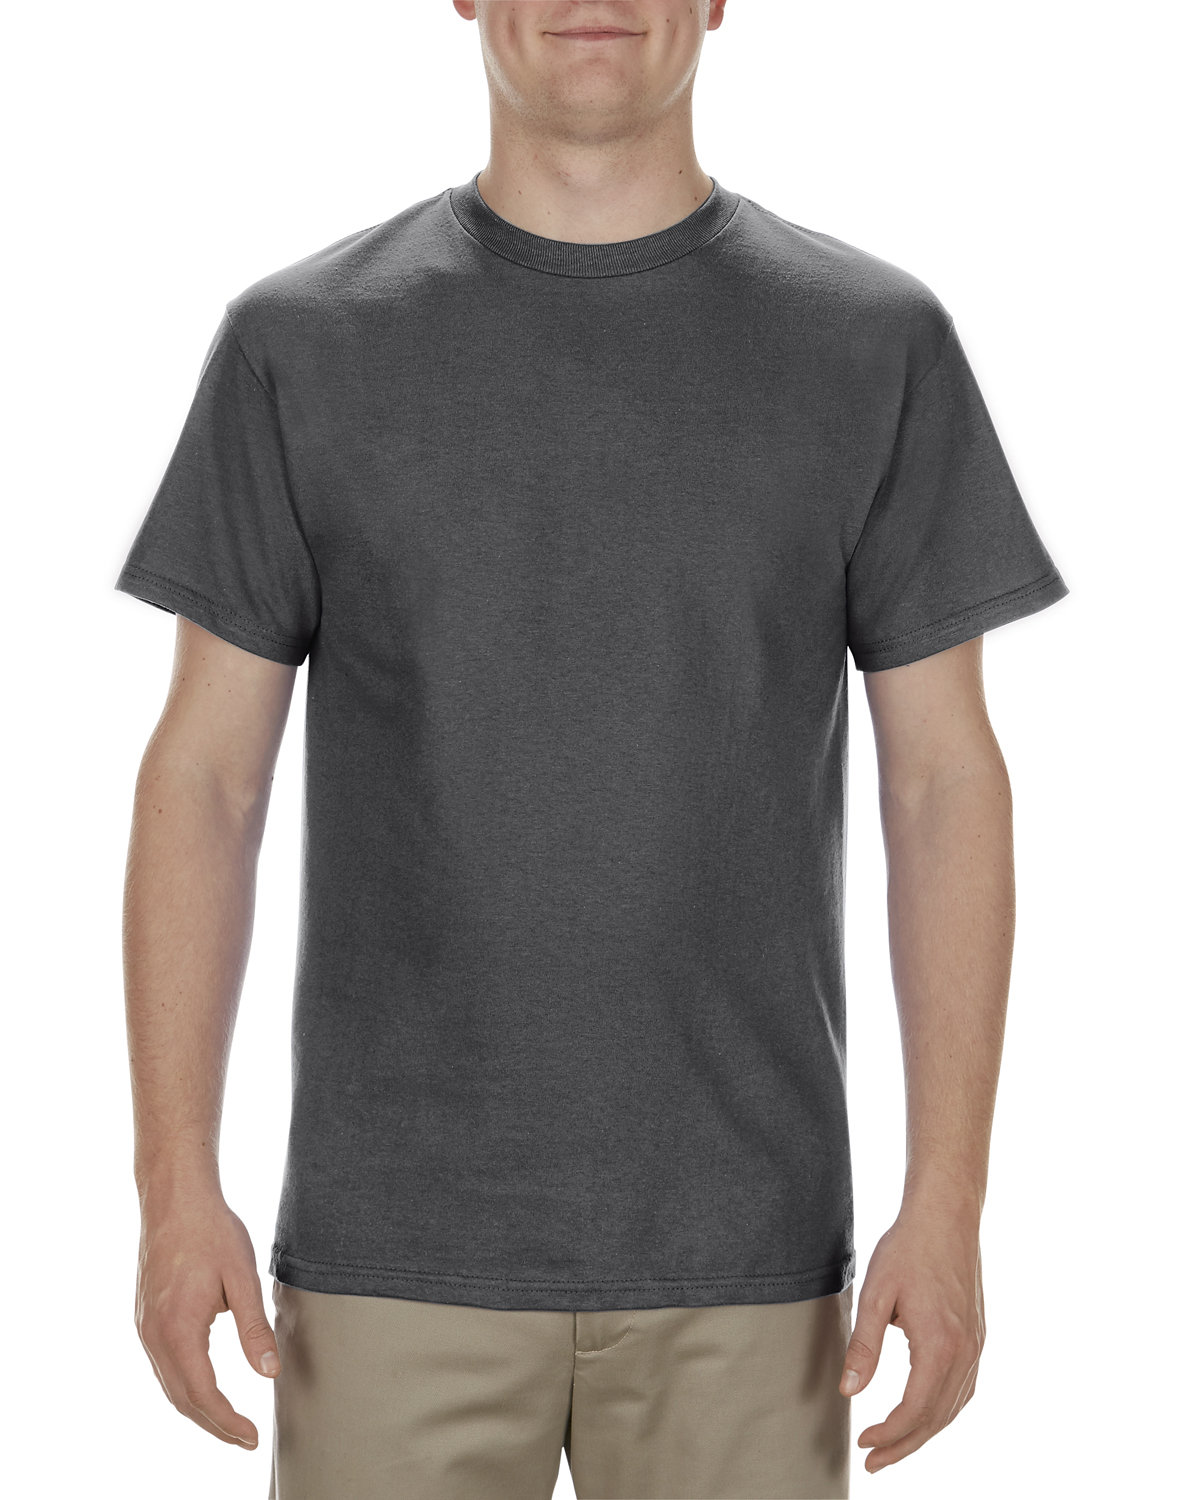 Alstyle Adult 5.1 oz., 100% Soft Spun Cotton T-Shirt CHARCOAL HEATHER 